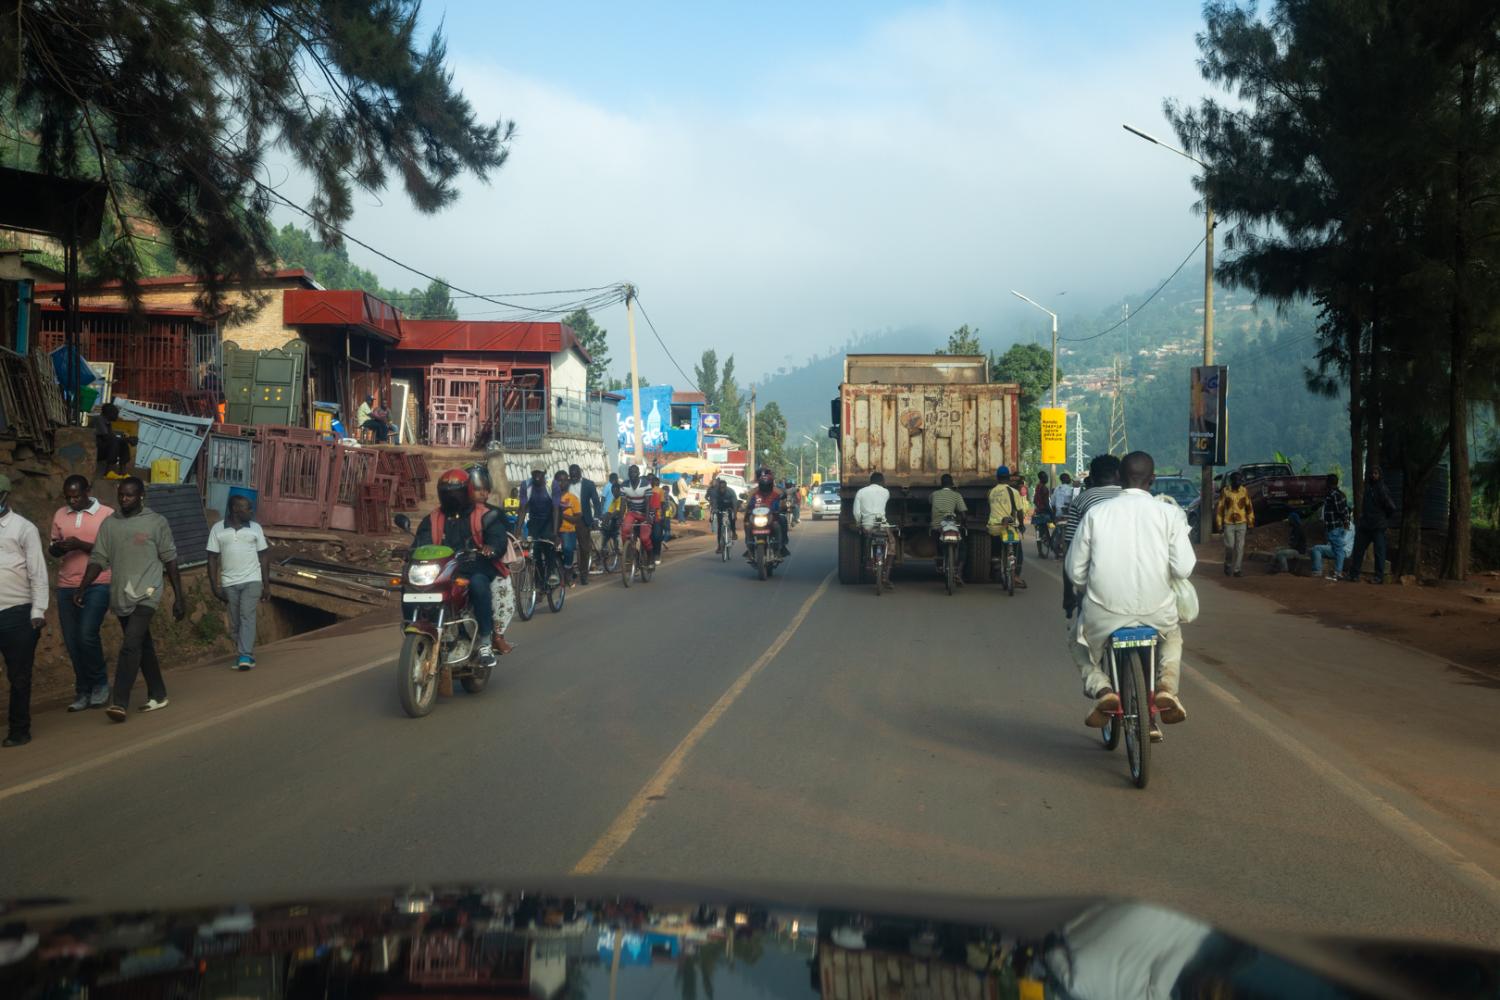 busy day in Rwanda